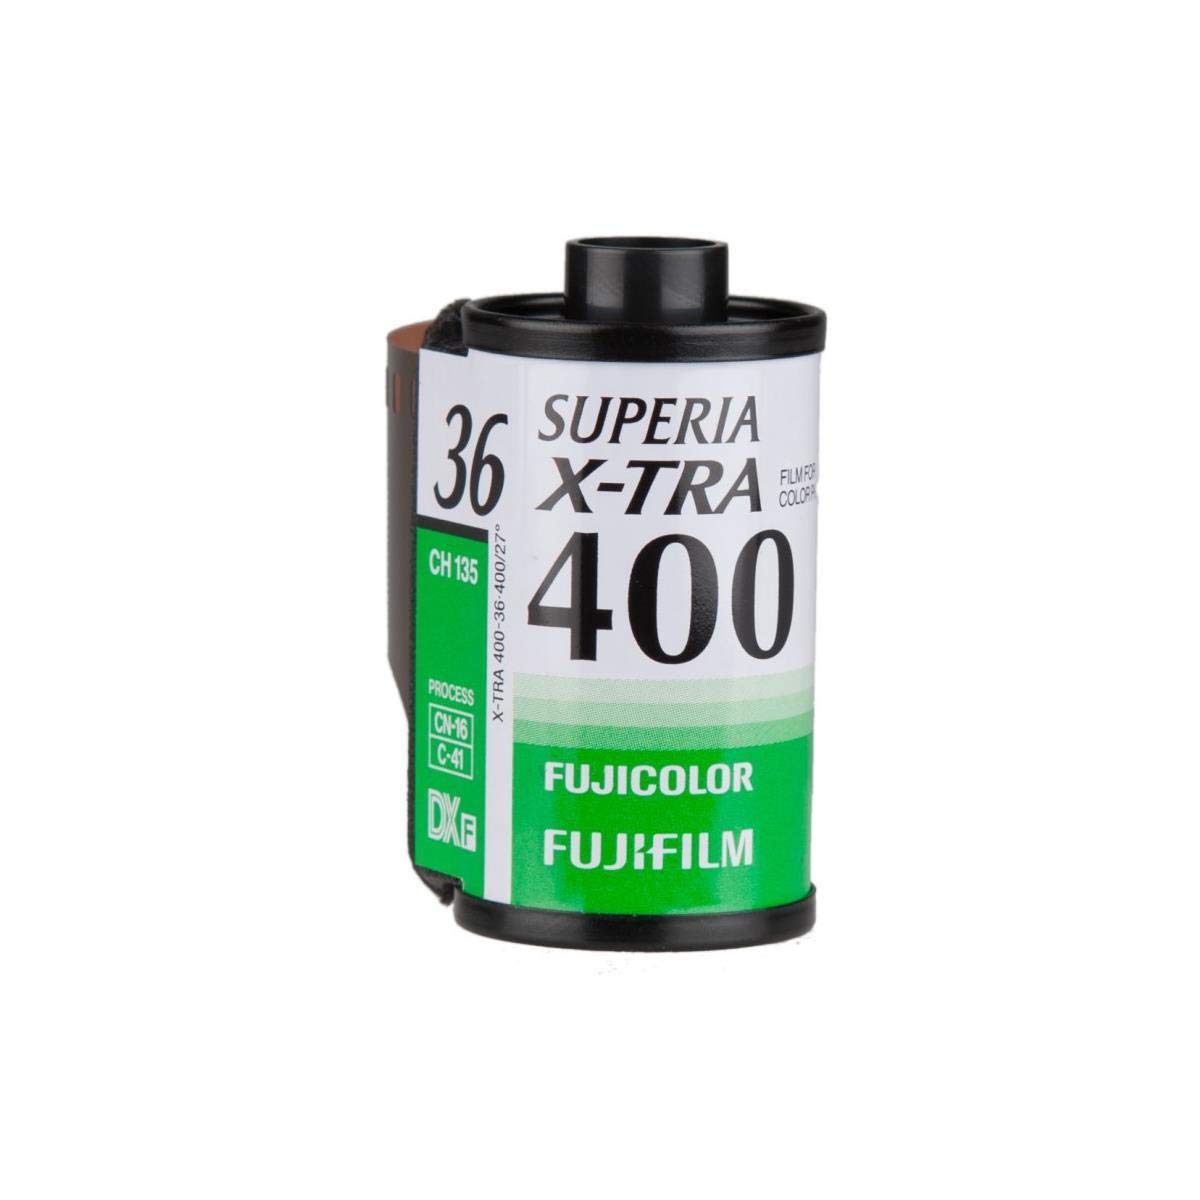 Fujifilm Fujicolor Superia X-TRA 400 Color Negative Film (35mm Roll Film, 36 Exposures